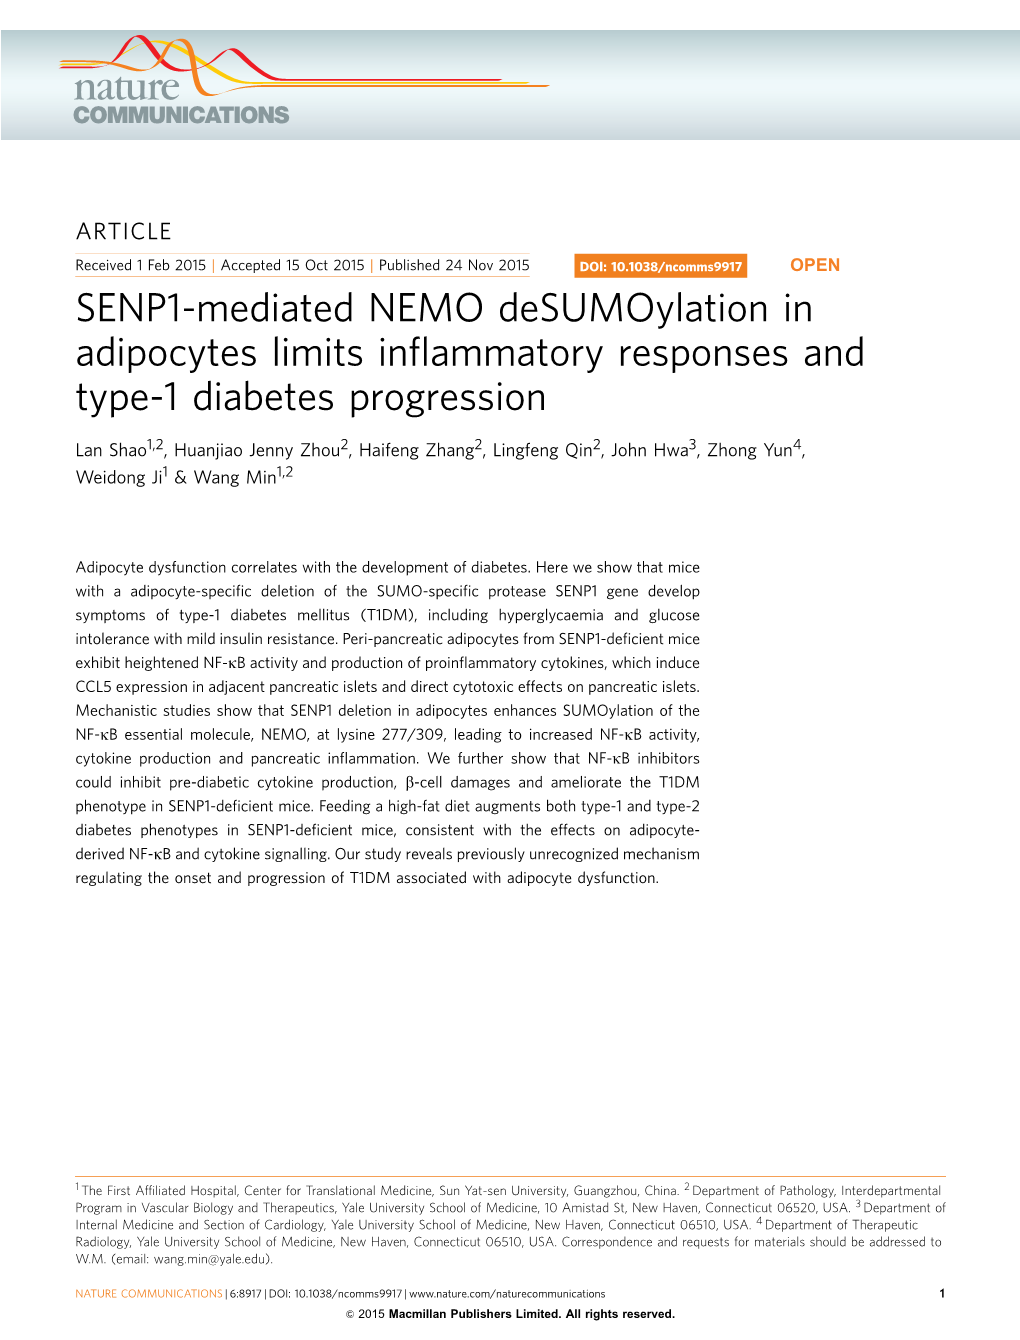 SENP1-Mediated NEMO Desumoylation in Adipocytes Limits Inflammatory Responses and Type-1 Diabetes Progression